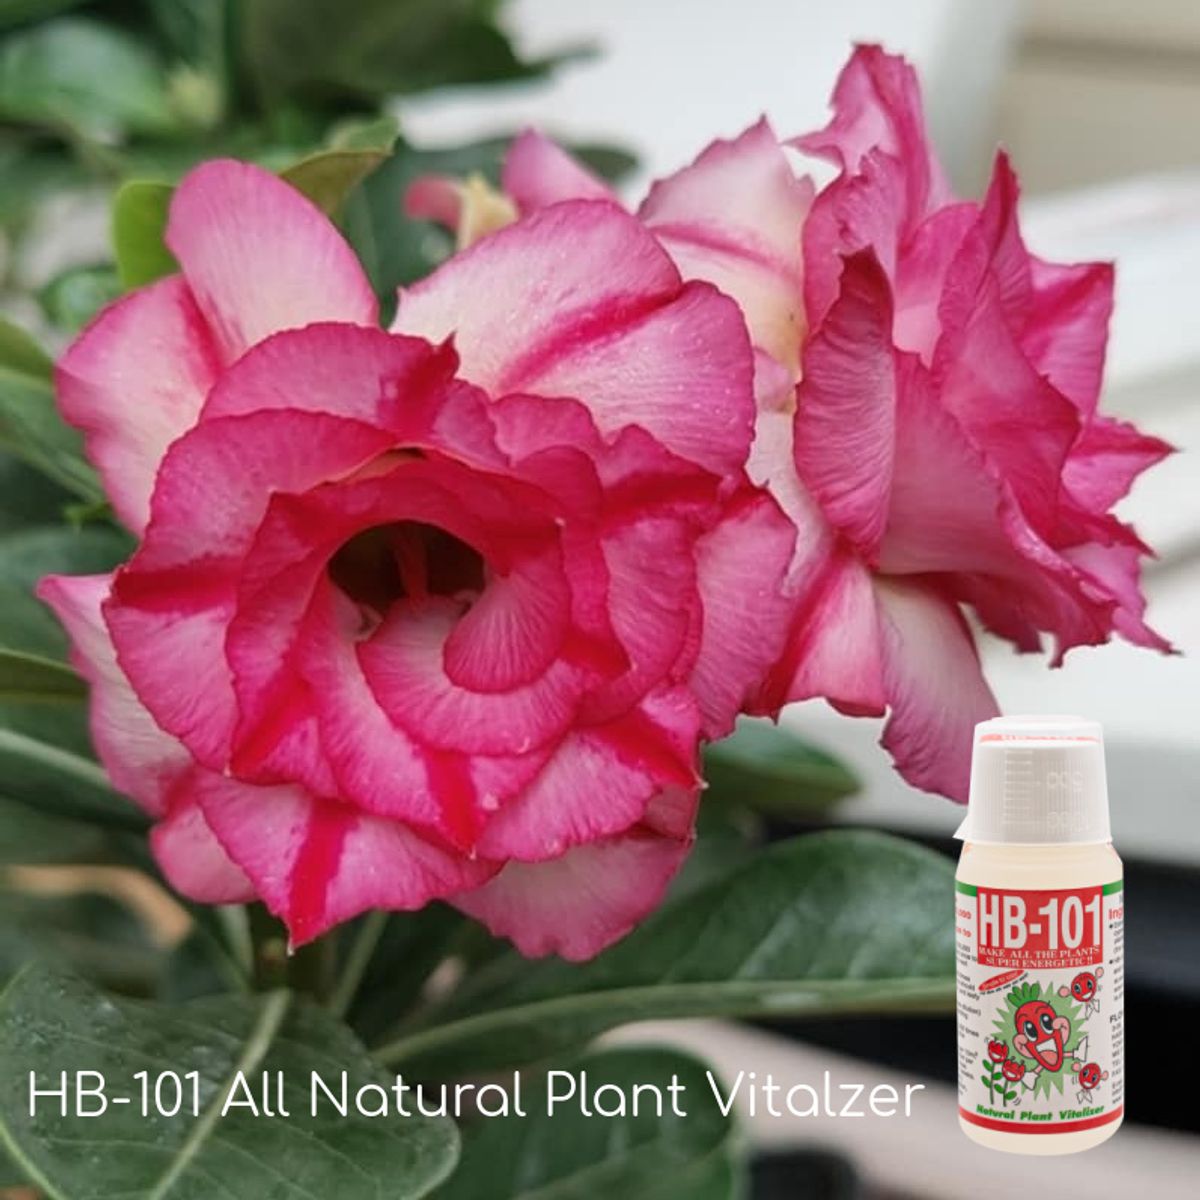 HB-101 Promotes Flowering